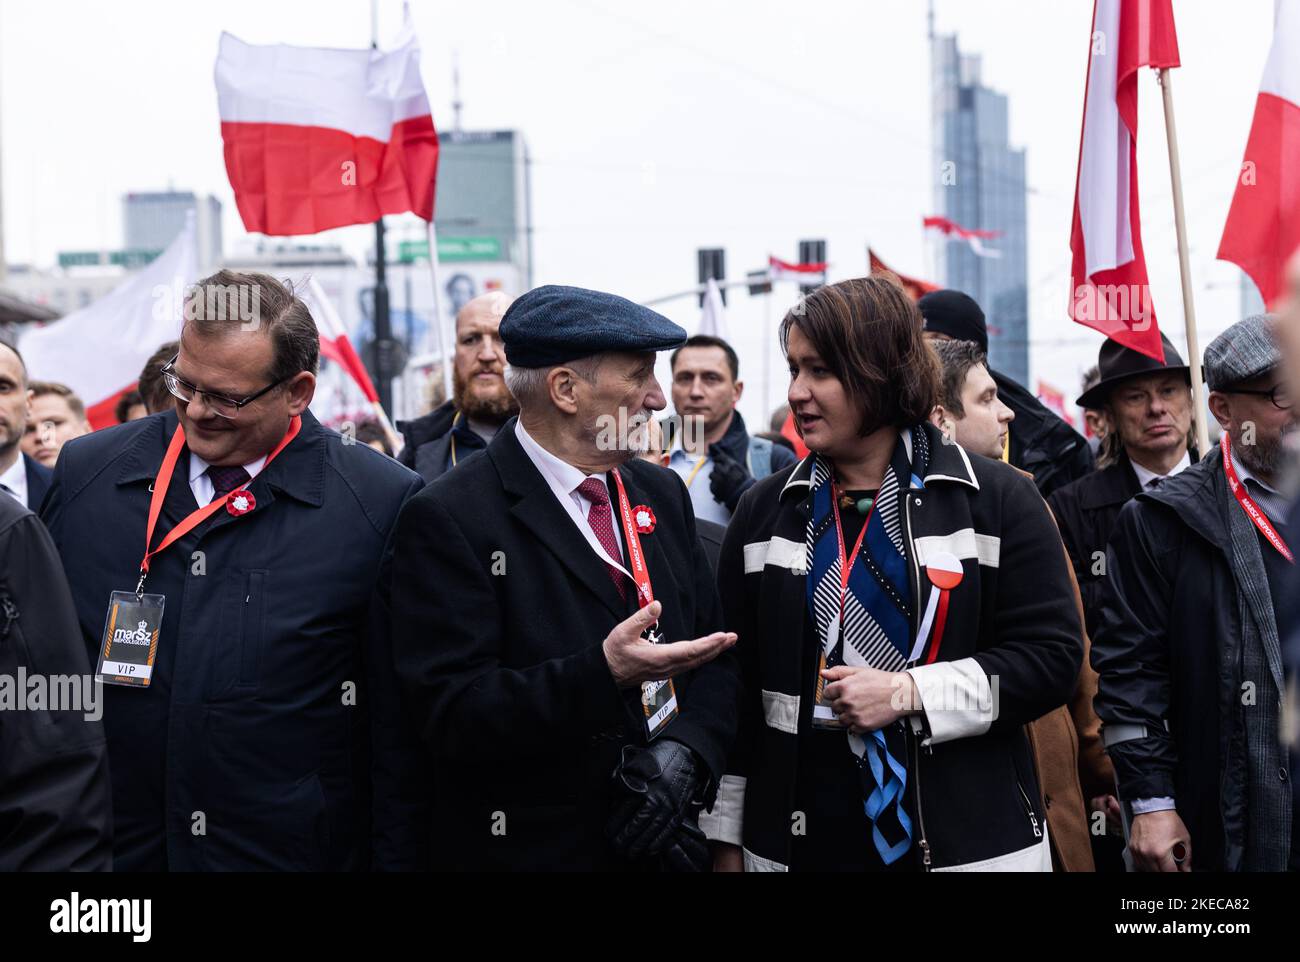 Warsaw, Poland. 11th Nov 2022. Antoni Macierewicz attends the Independence March to mark the 104th anniversary of Polish independence, in Warsaw, Poland November 11, 2022 Credit: Kamil Jasinski/Alamy Live News Stock Photo